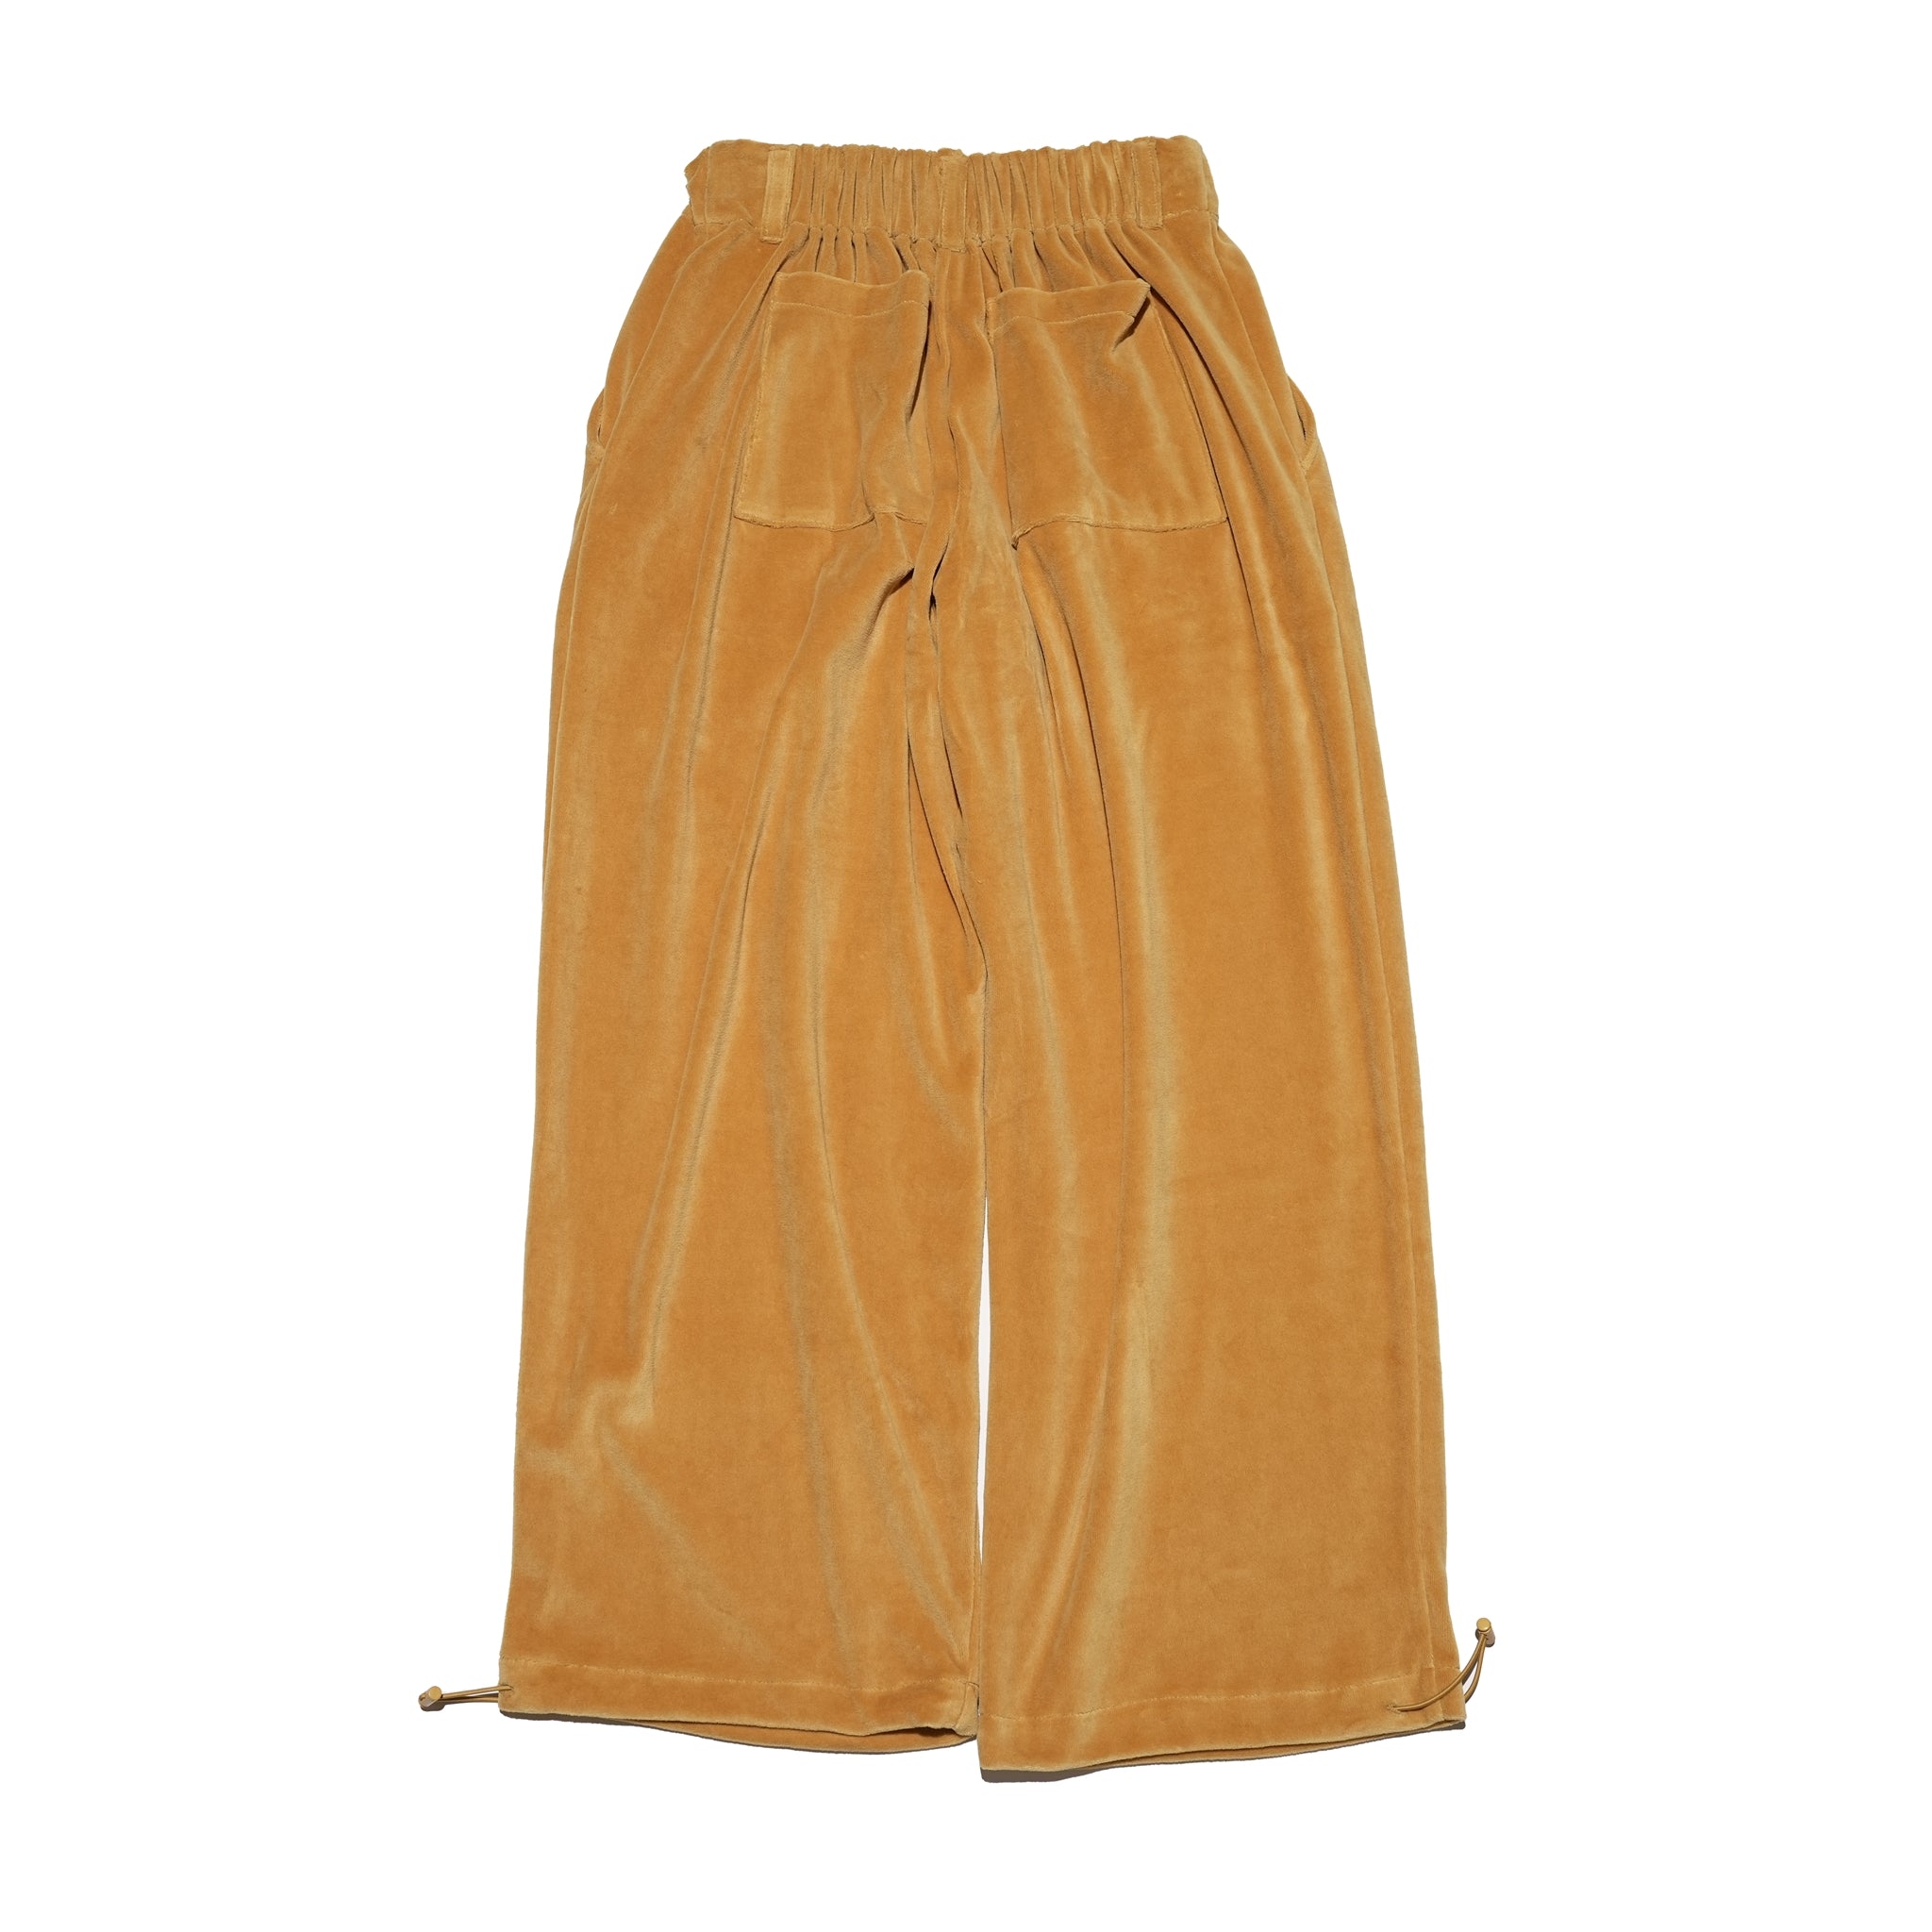 Name:Velor Pile Tapered Pants | Color:Marigold/Wakaba/Black【AMBERGLEAM_アンバーグリーム】| No:1181141312